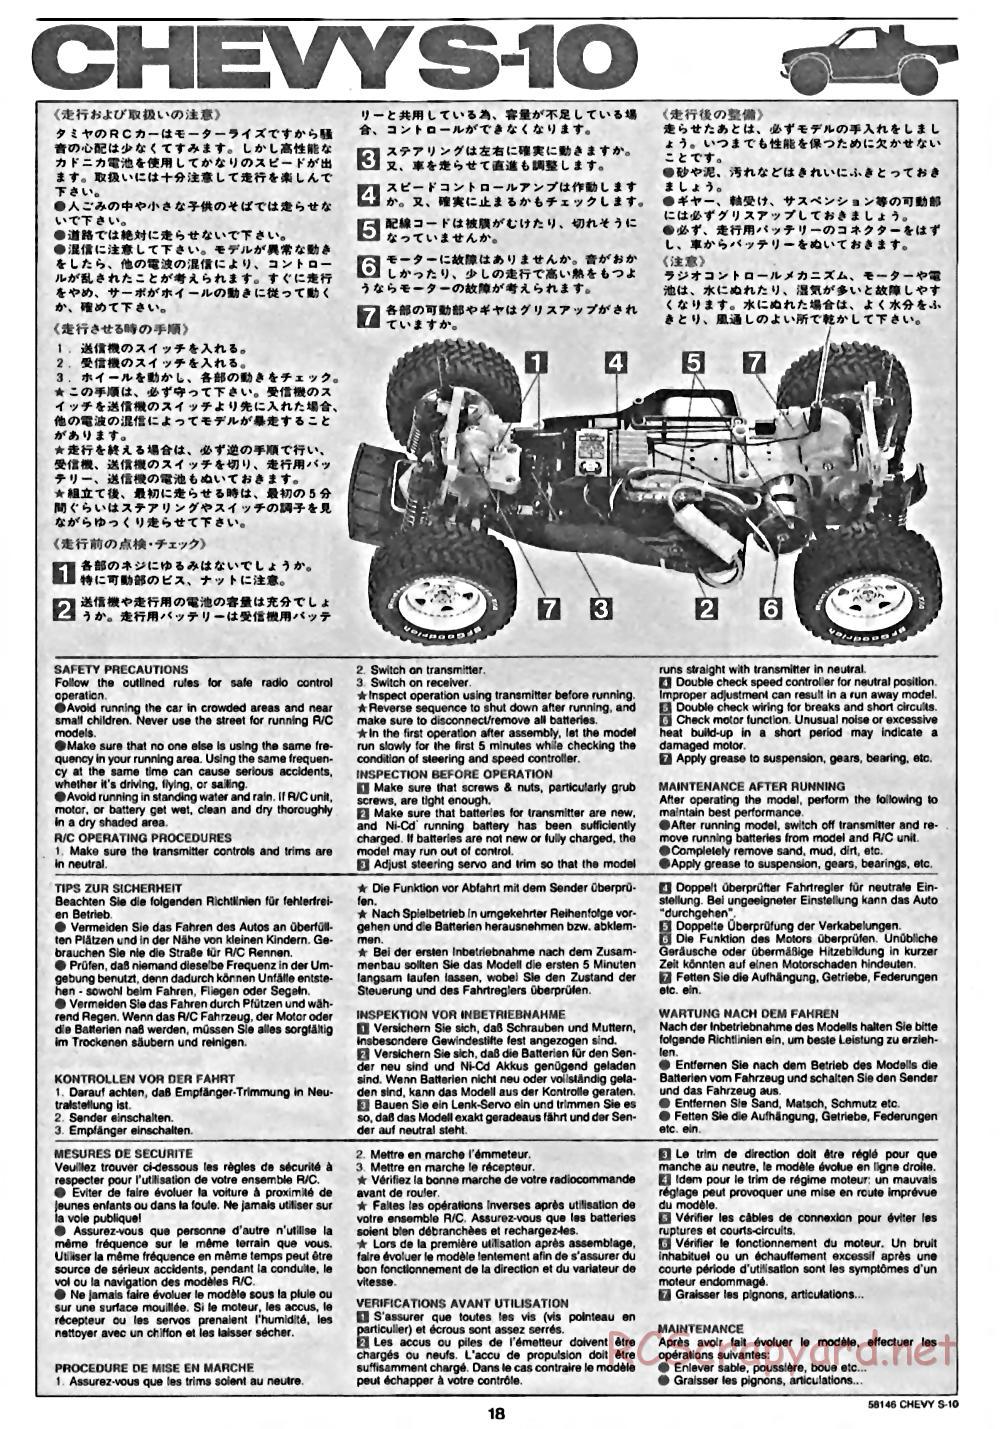 Tamiya - Chevy S-10 Chassis - Manual - Page 18